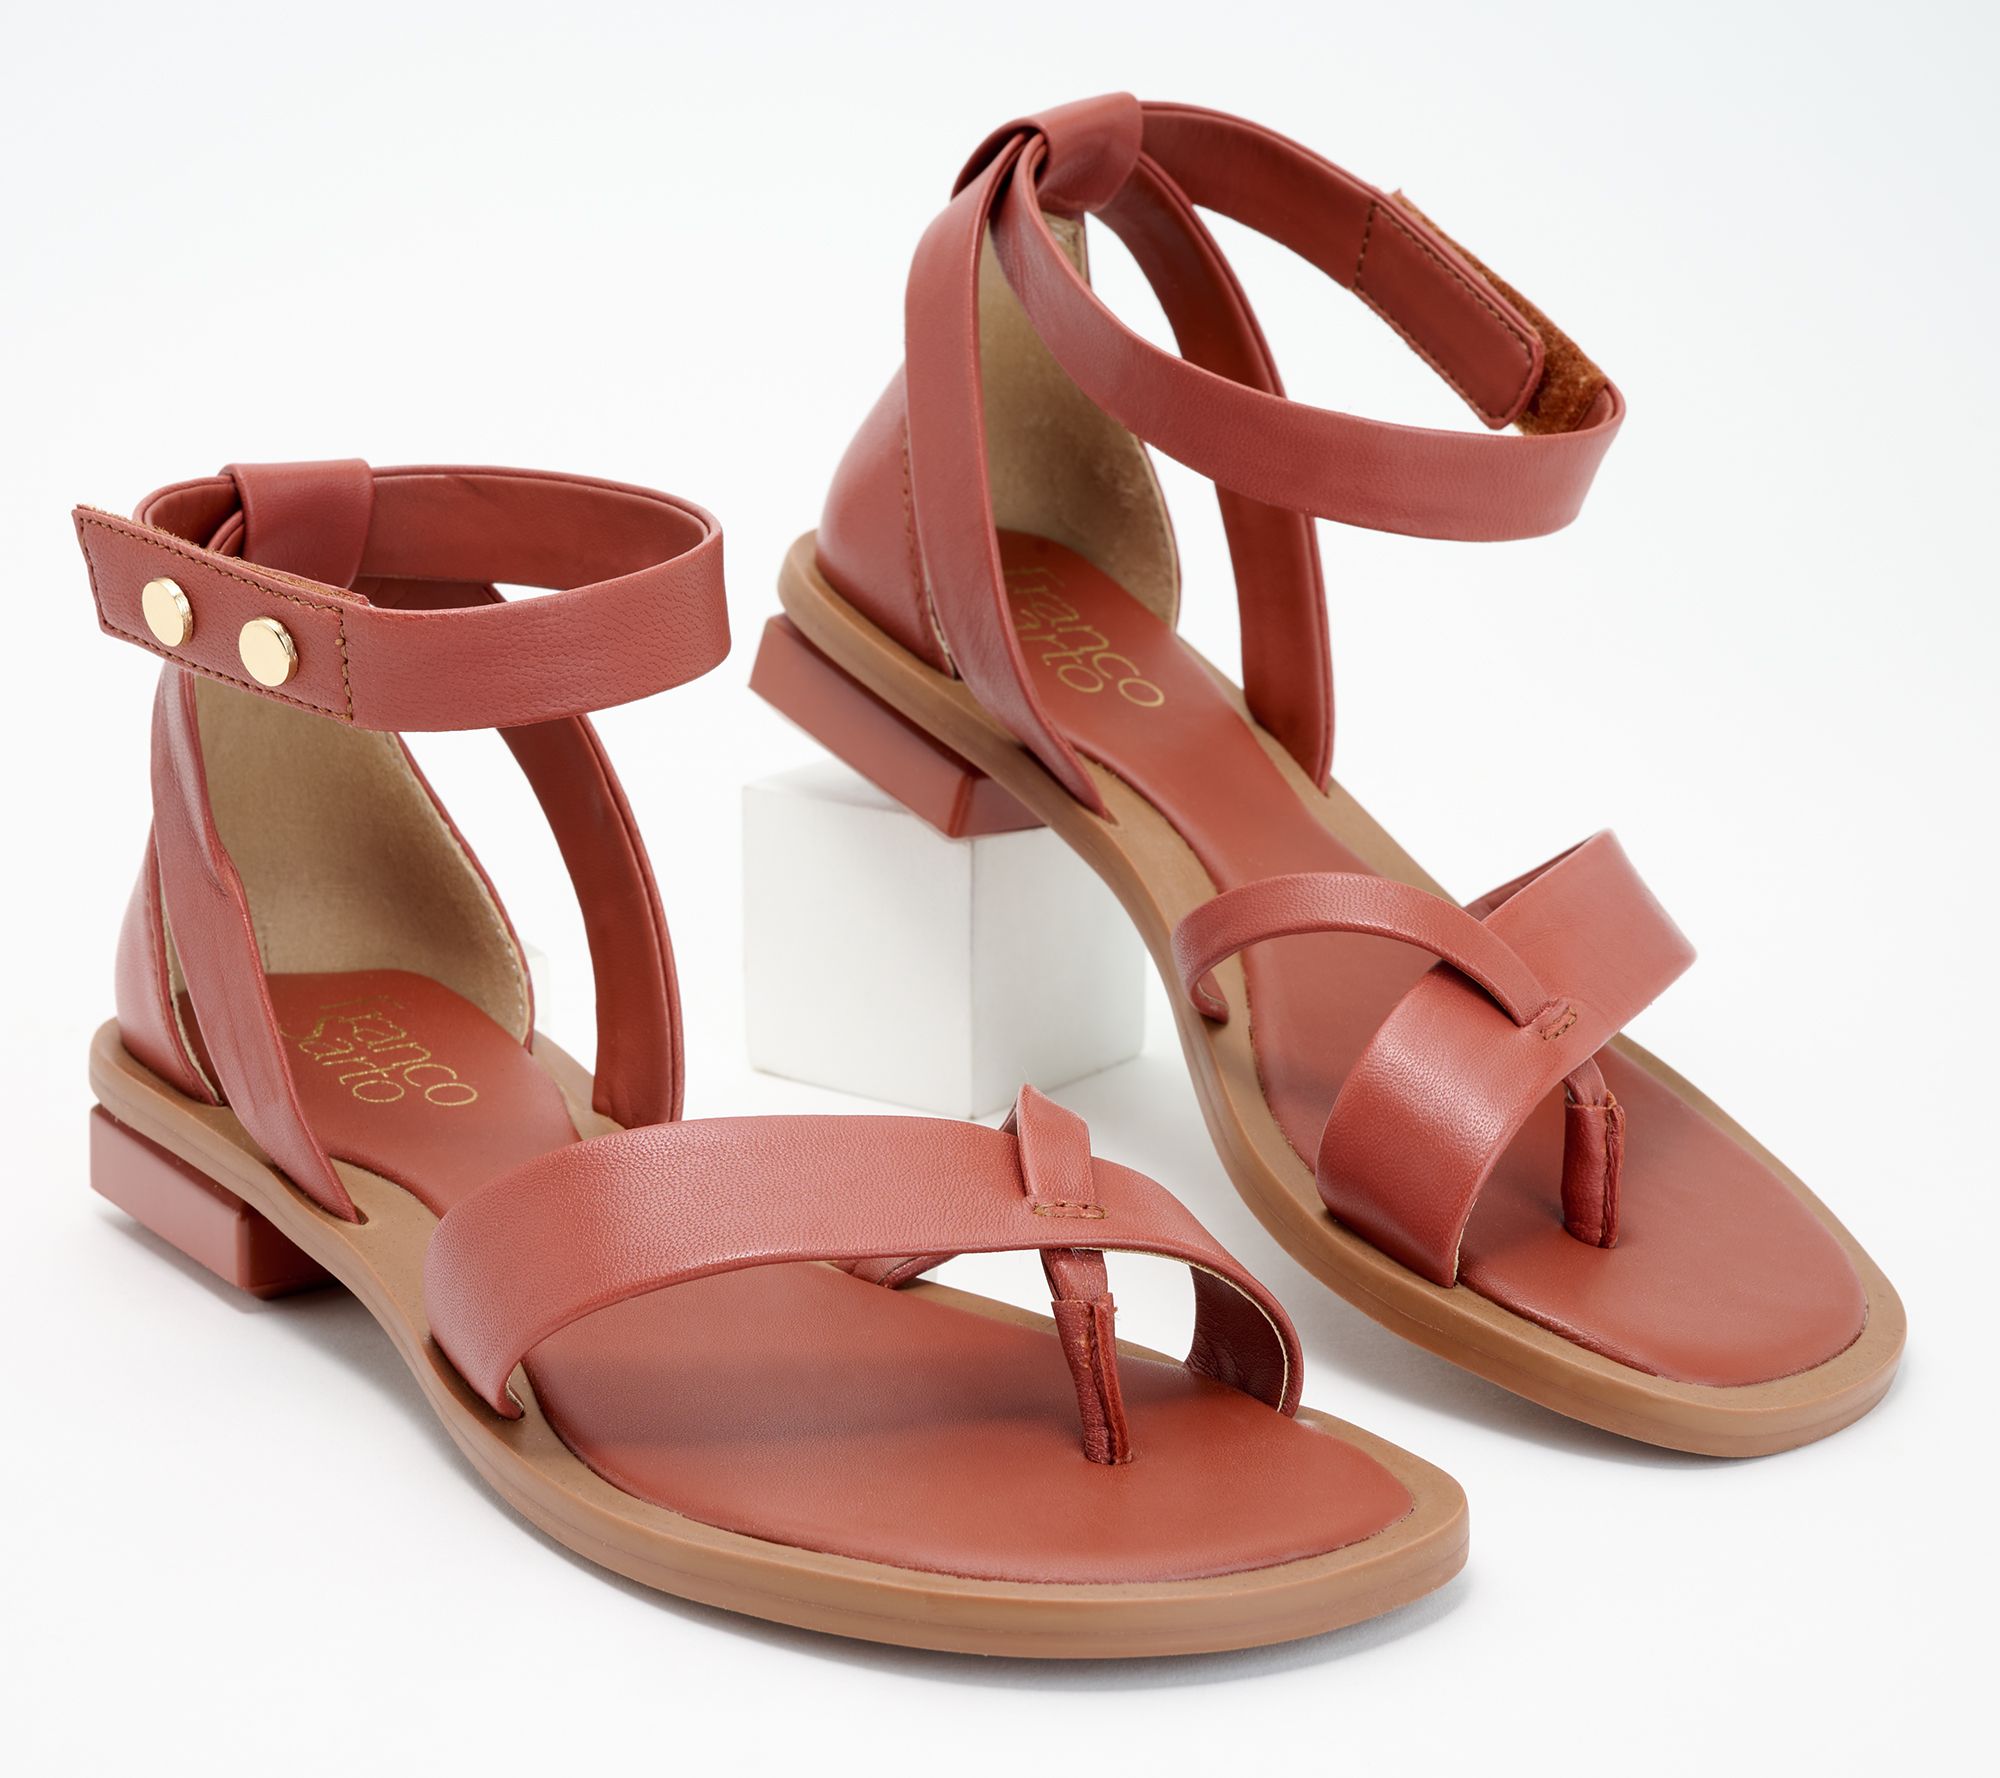 Franco Sarto Adjustable Leather Sandals - Parker - QVC.com